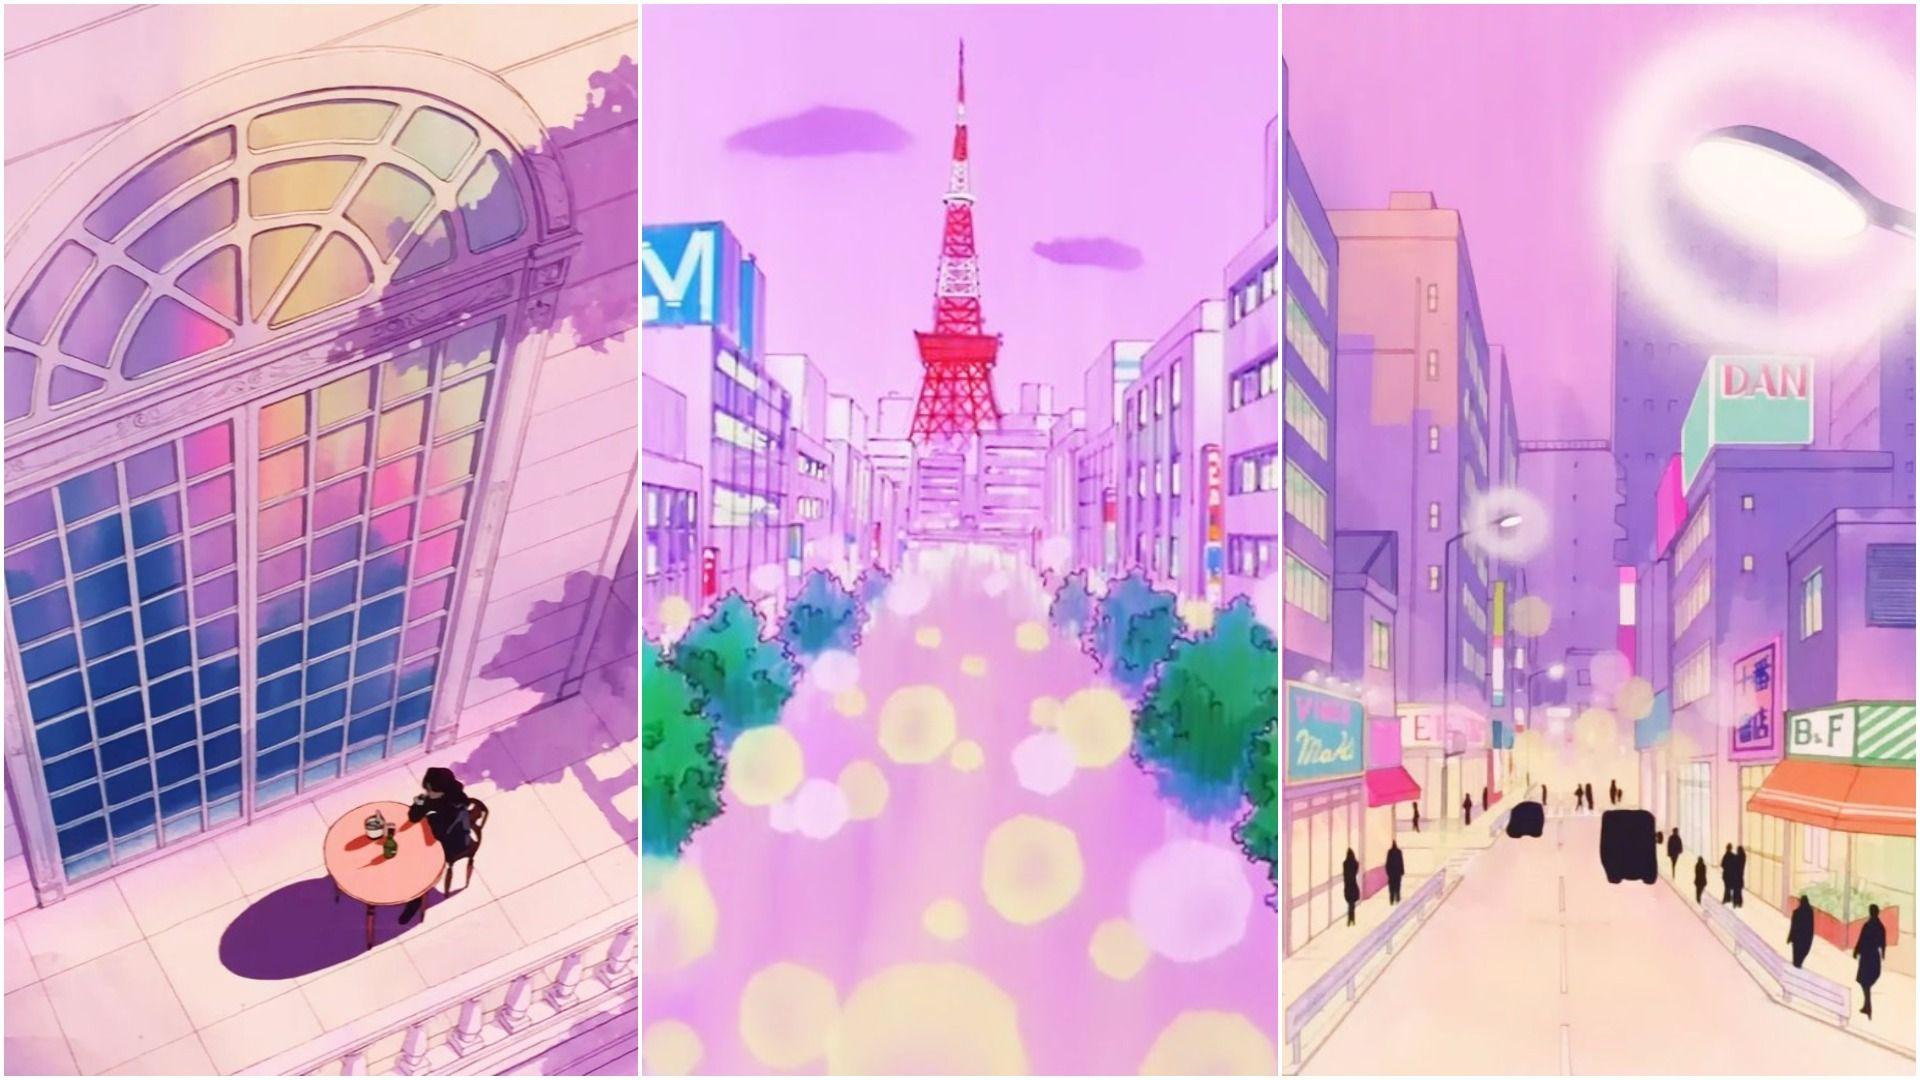 Let's Admire Sailor Moon Anime Scenery. Sailor moon aesthetic, Sailor moon background, Anime scenery